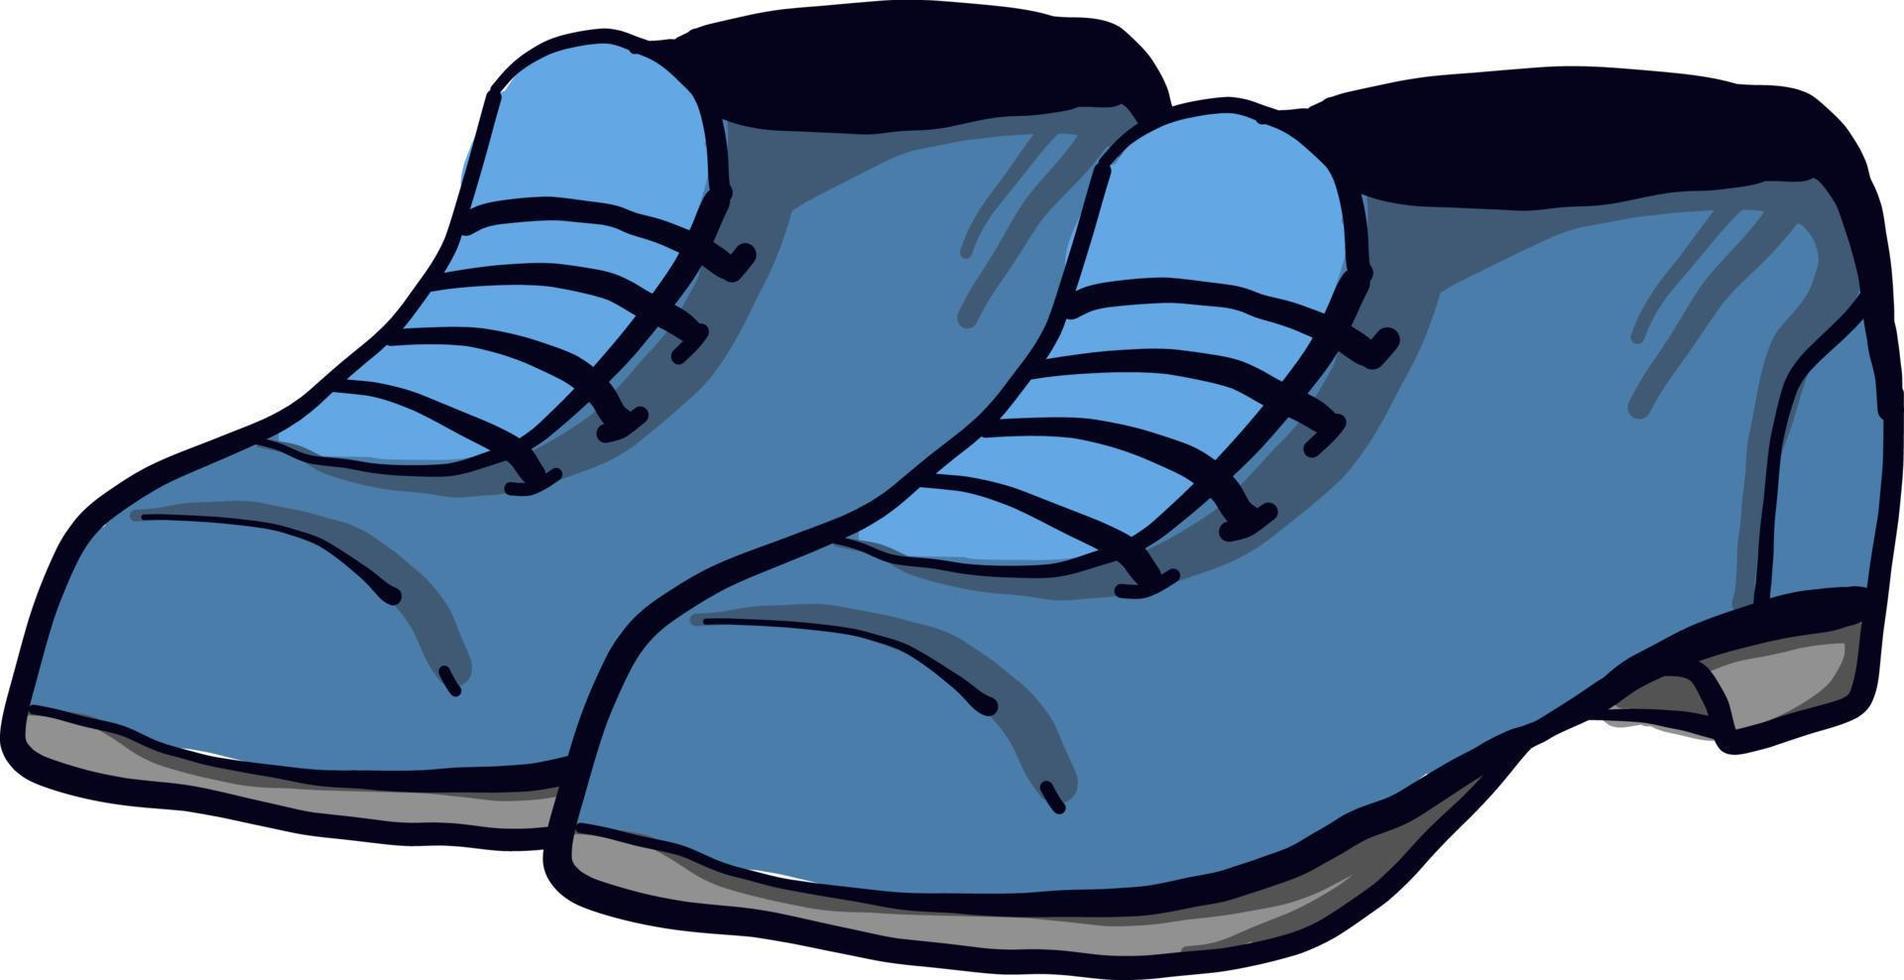 Blue man shoes , illustration, vector on white background